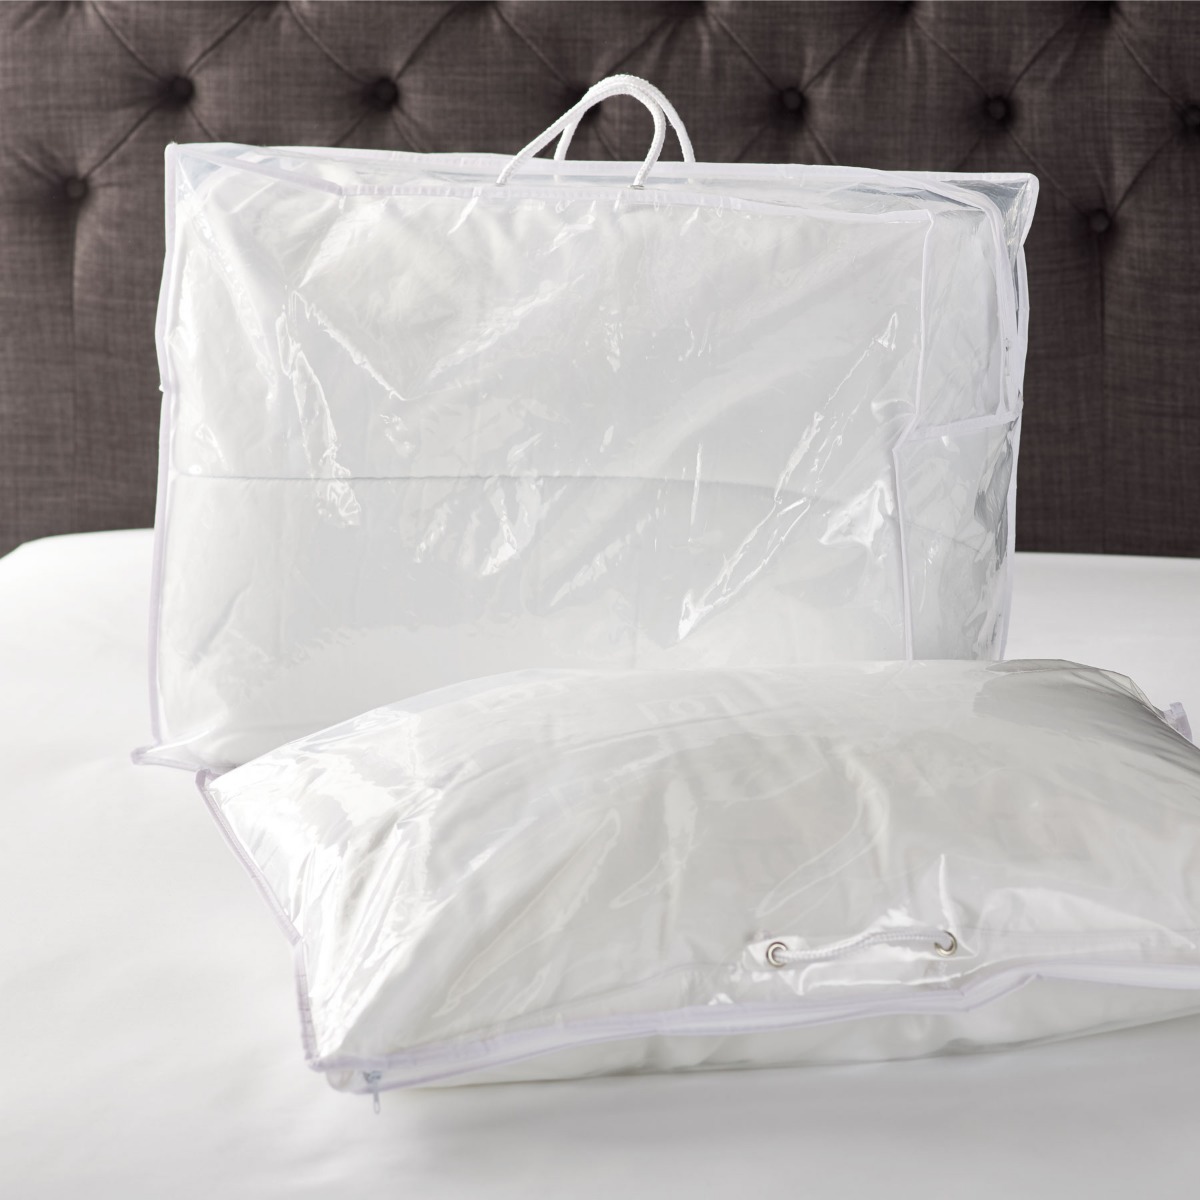 Blanket & Pillow Storage Bags